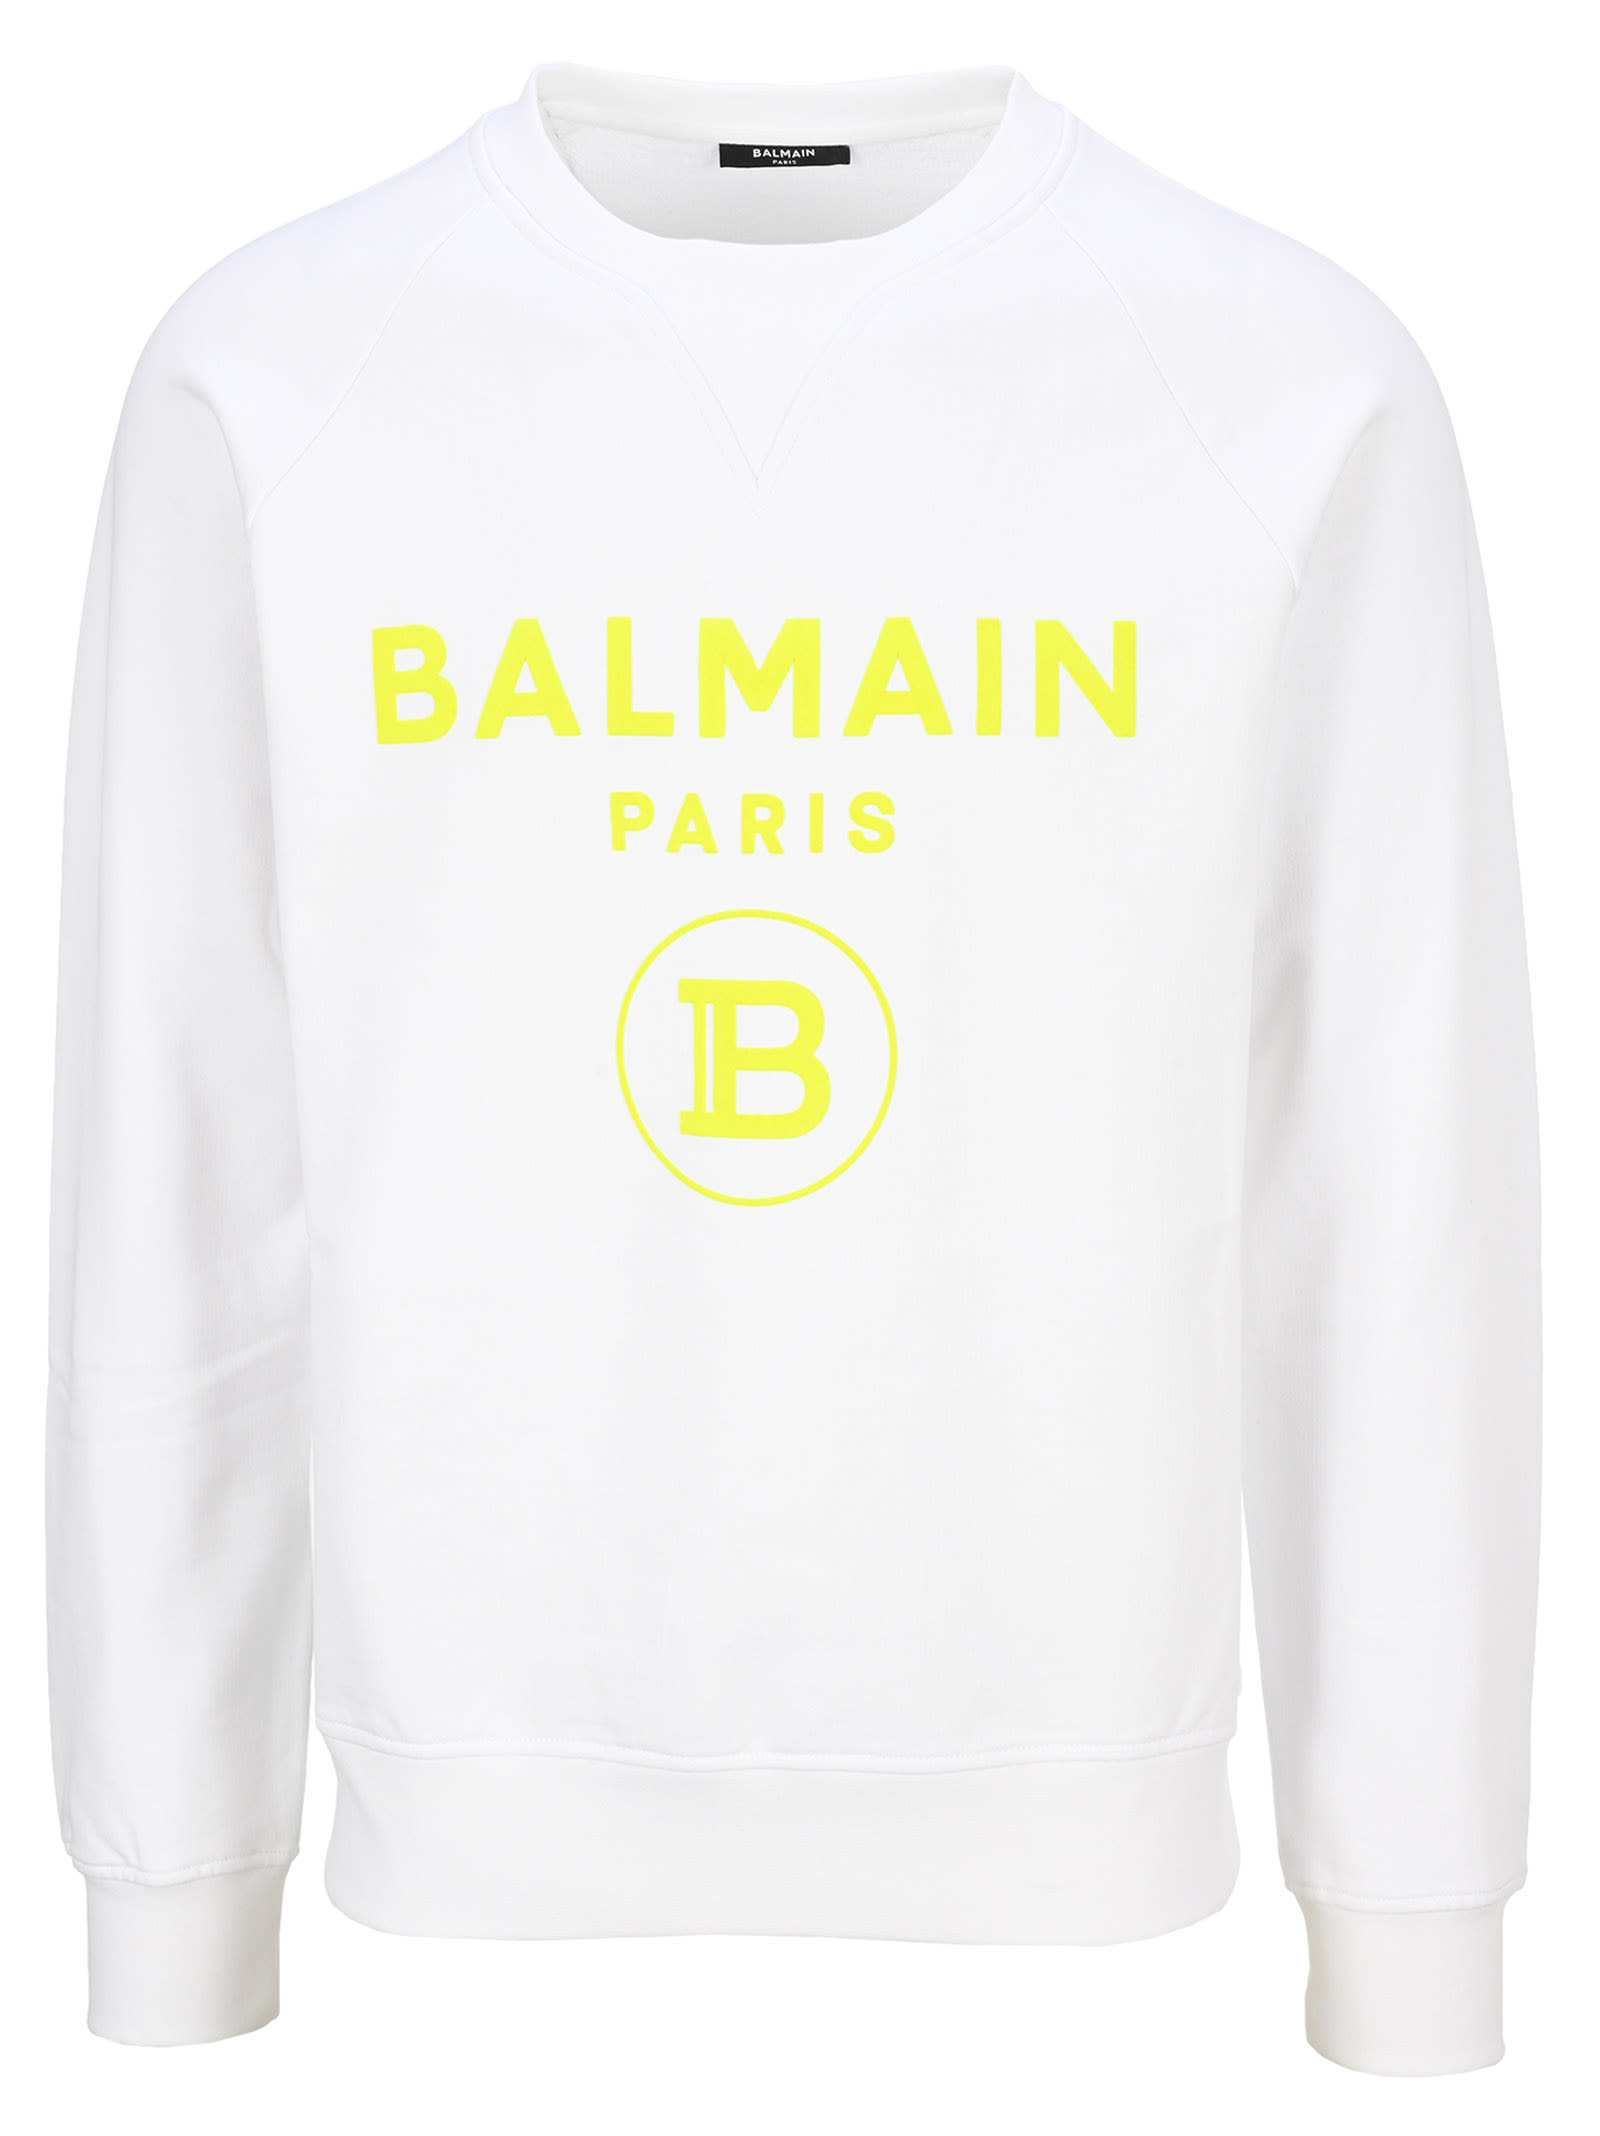 Balmain Black Cotton Sweatshirt With Flocked Neon Yellow Balmain Logo